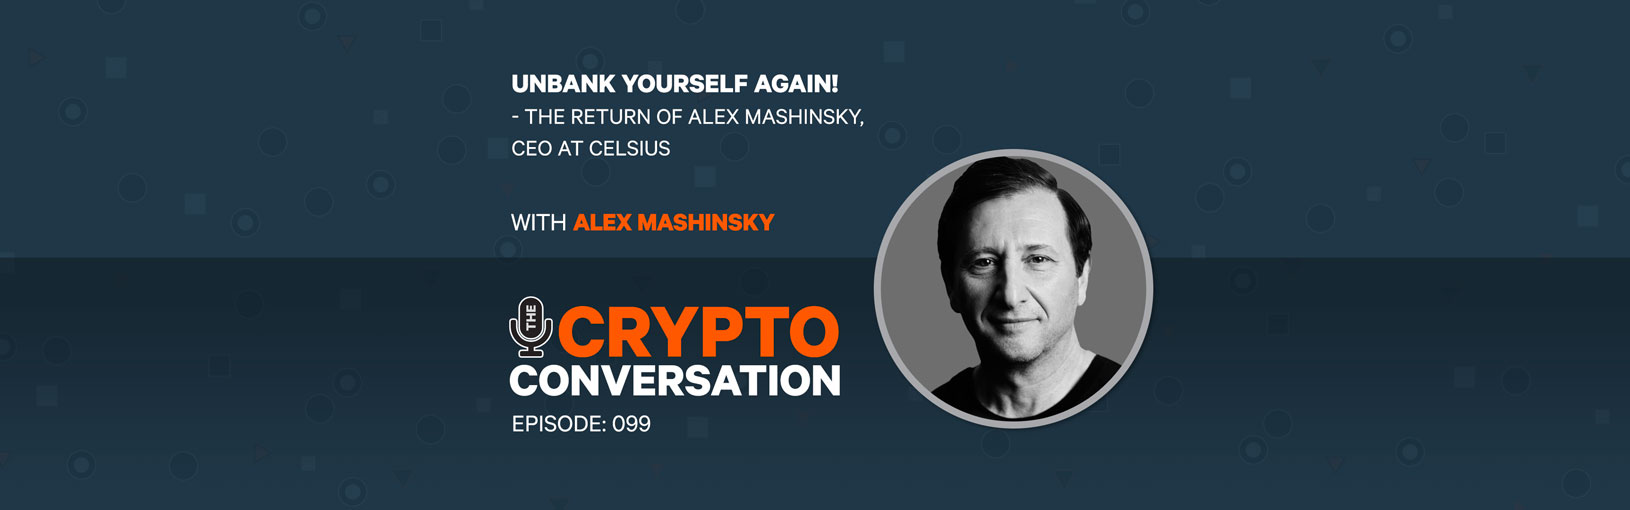 Alex Mashinsky (Celsius) returns – Unbank Yourself again!